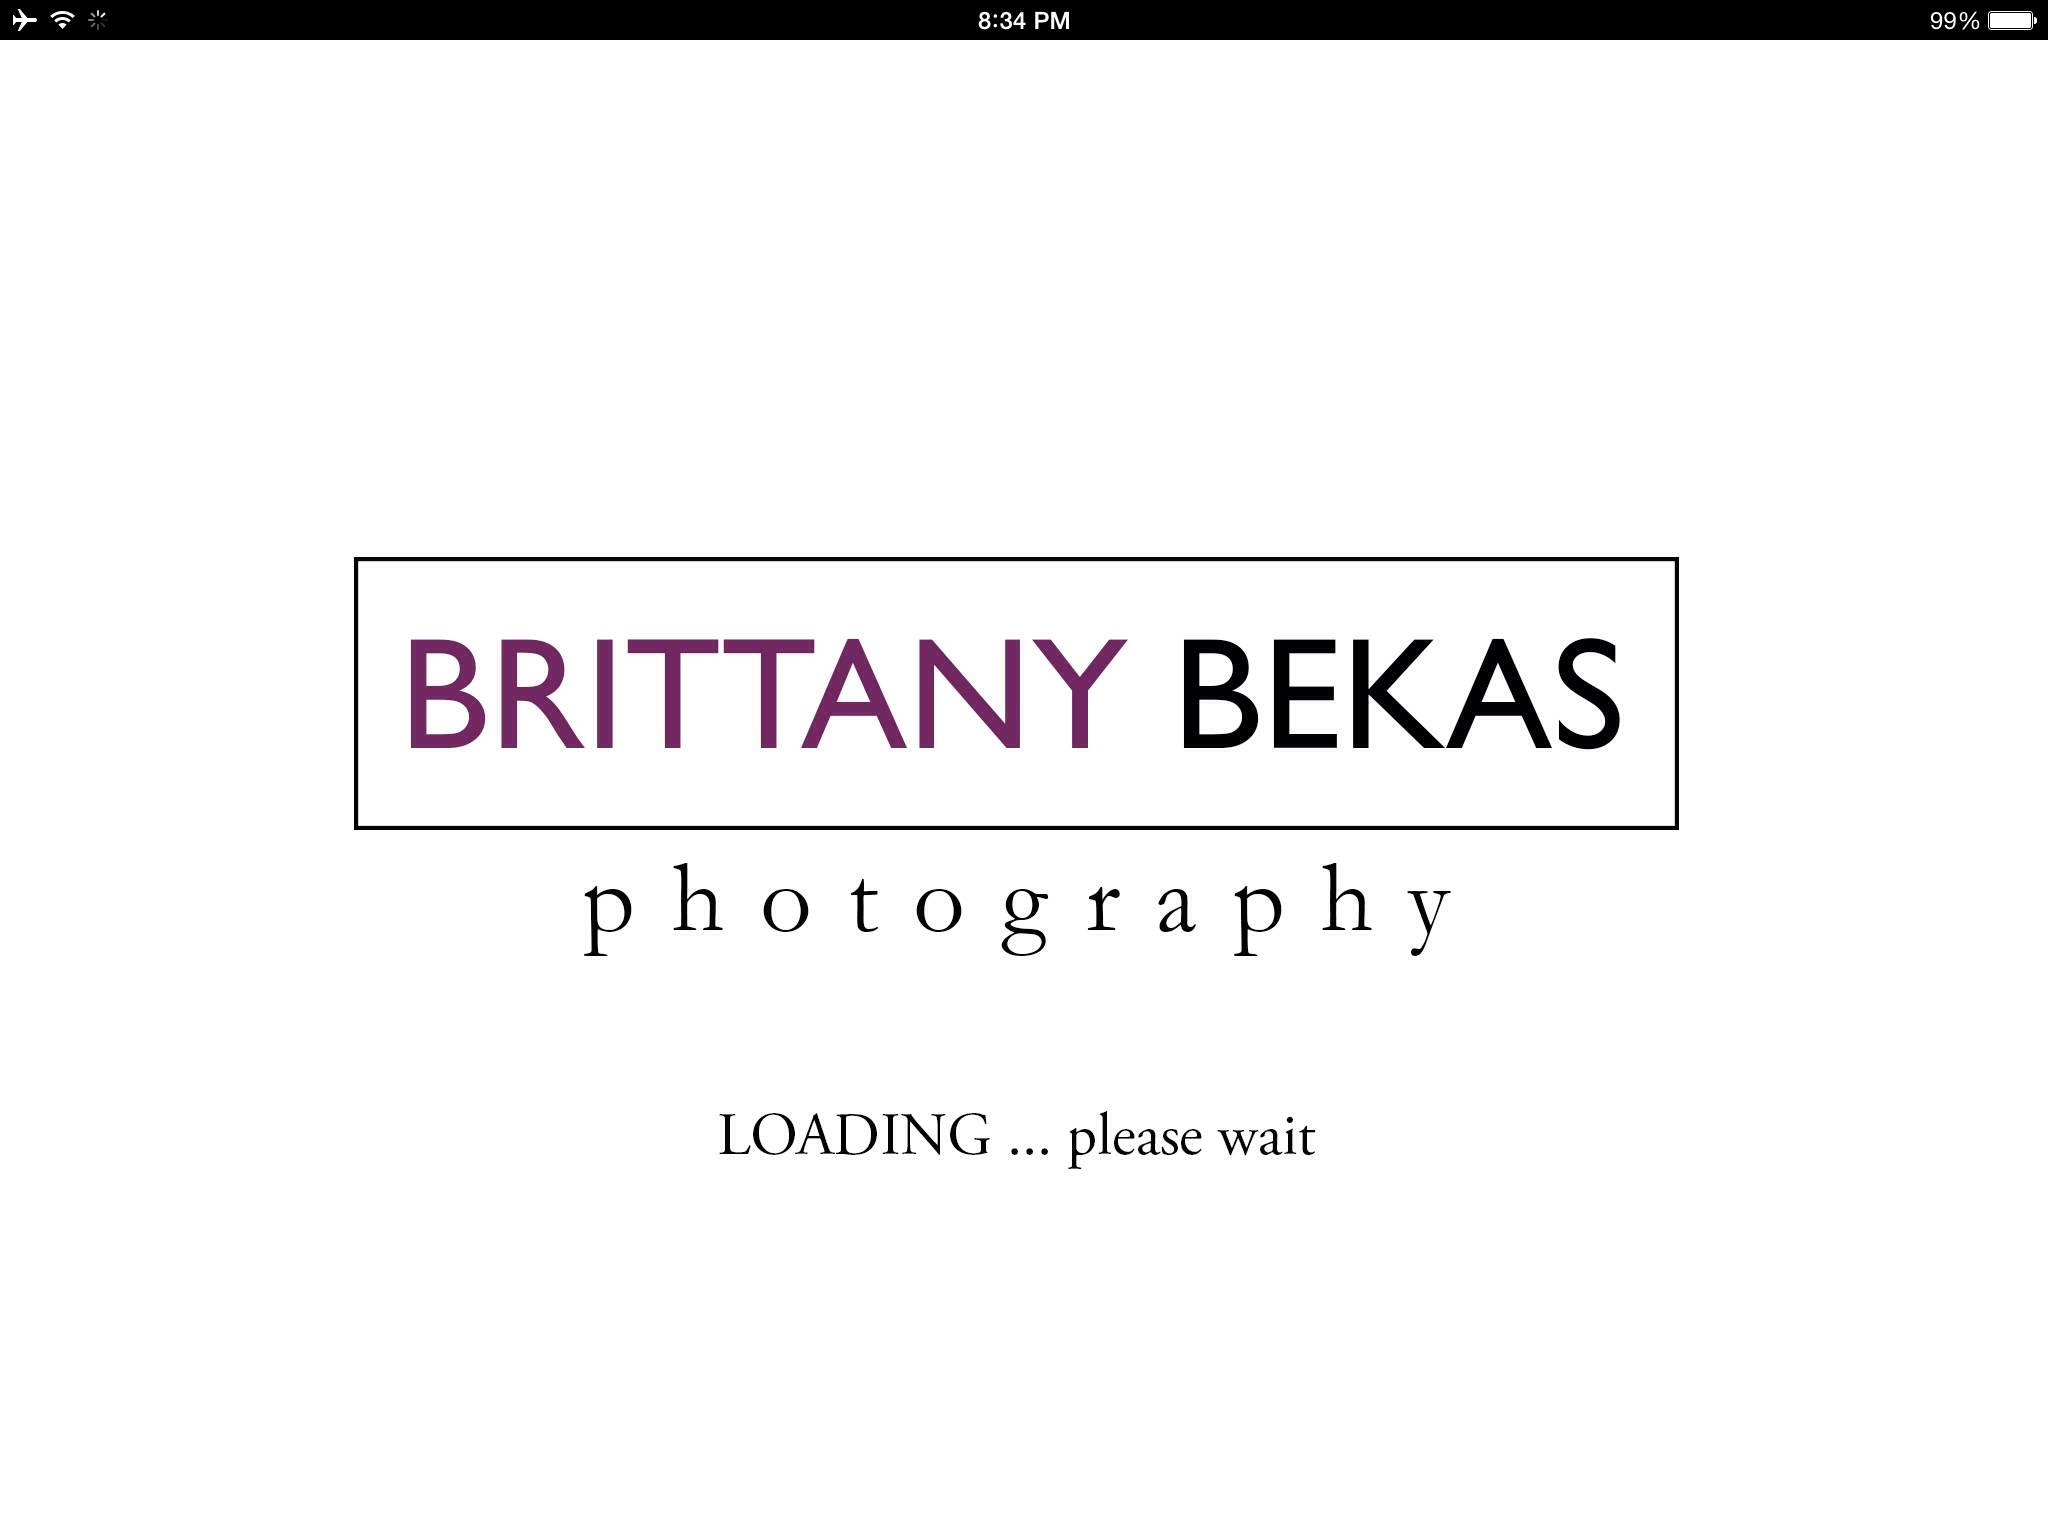 custom smartphone / tablet photo gallery app // brittany bekas photography - www.brittanybekas.com // wedding + lifestyle photographer based in Chicago, Illinois